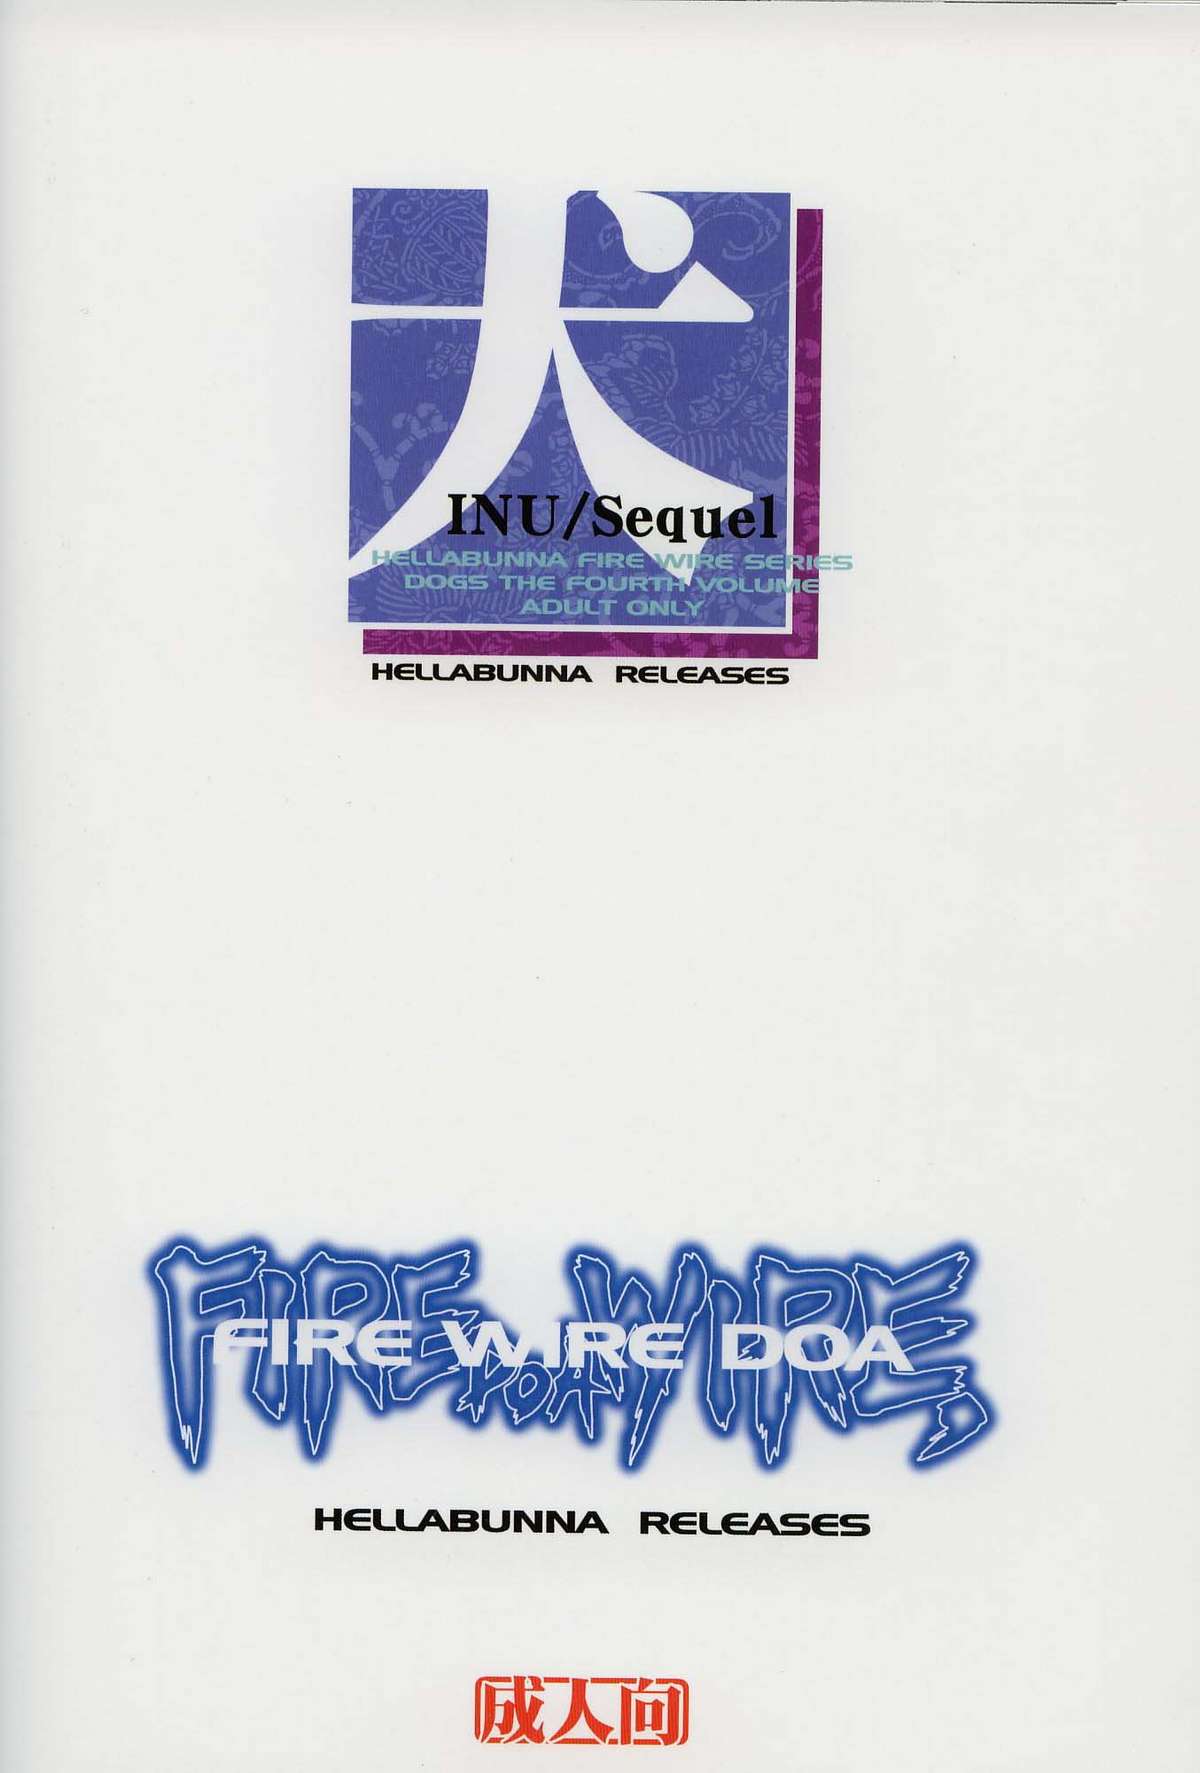 [Hellabunna] [2002-08-11] [C62] Fire Wire 4 - INU/Sequel 